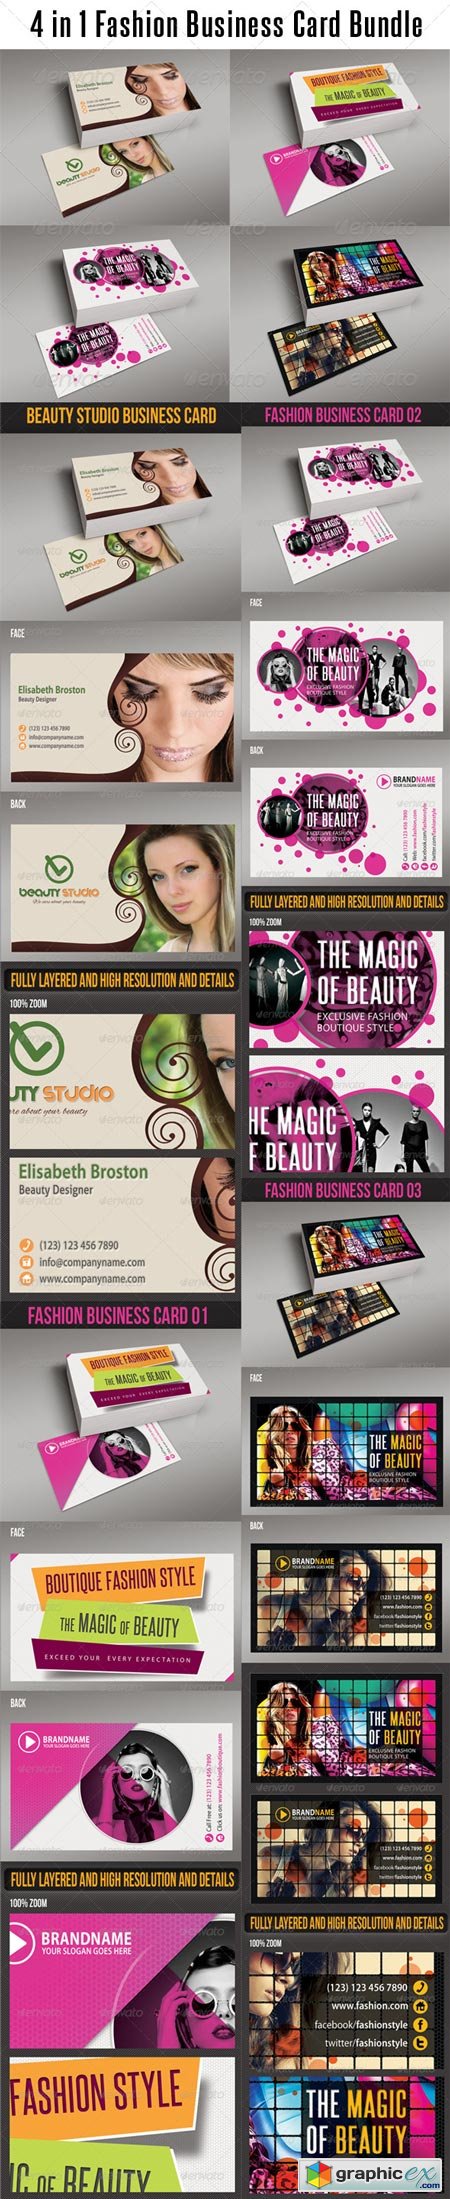 4 in 1 Fashion Business Card Bundle